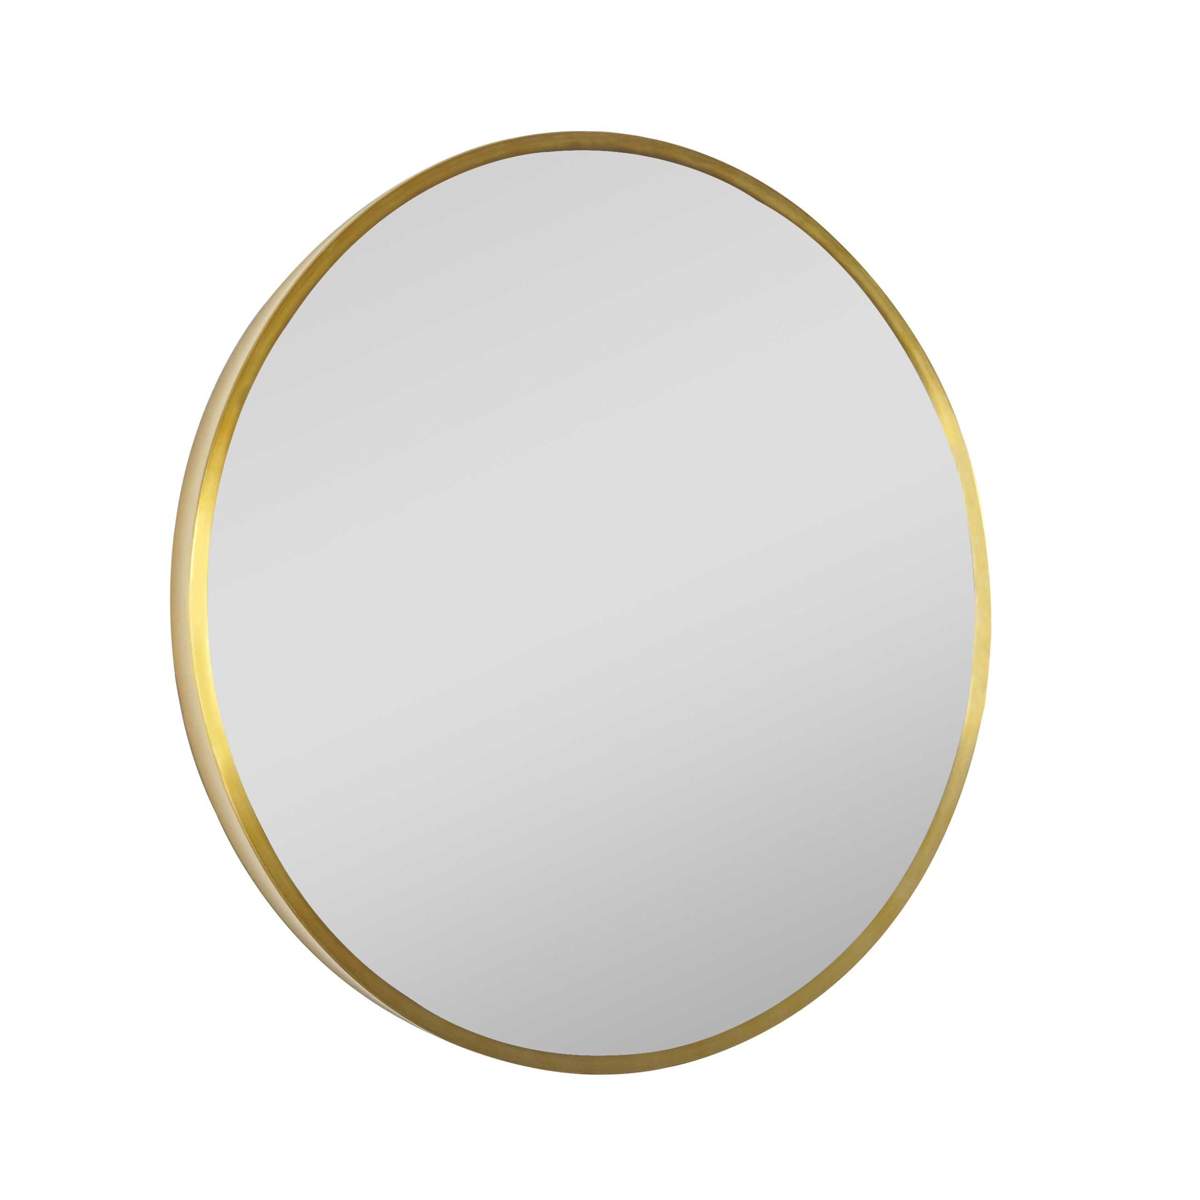 JTP Vos Brushed Brass Mirror without Light (23M60WLBBR)